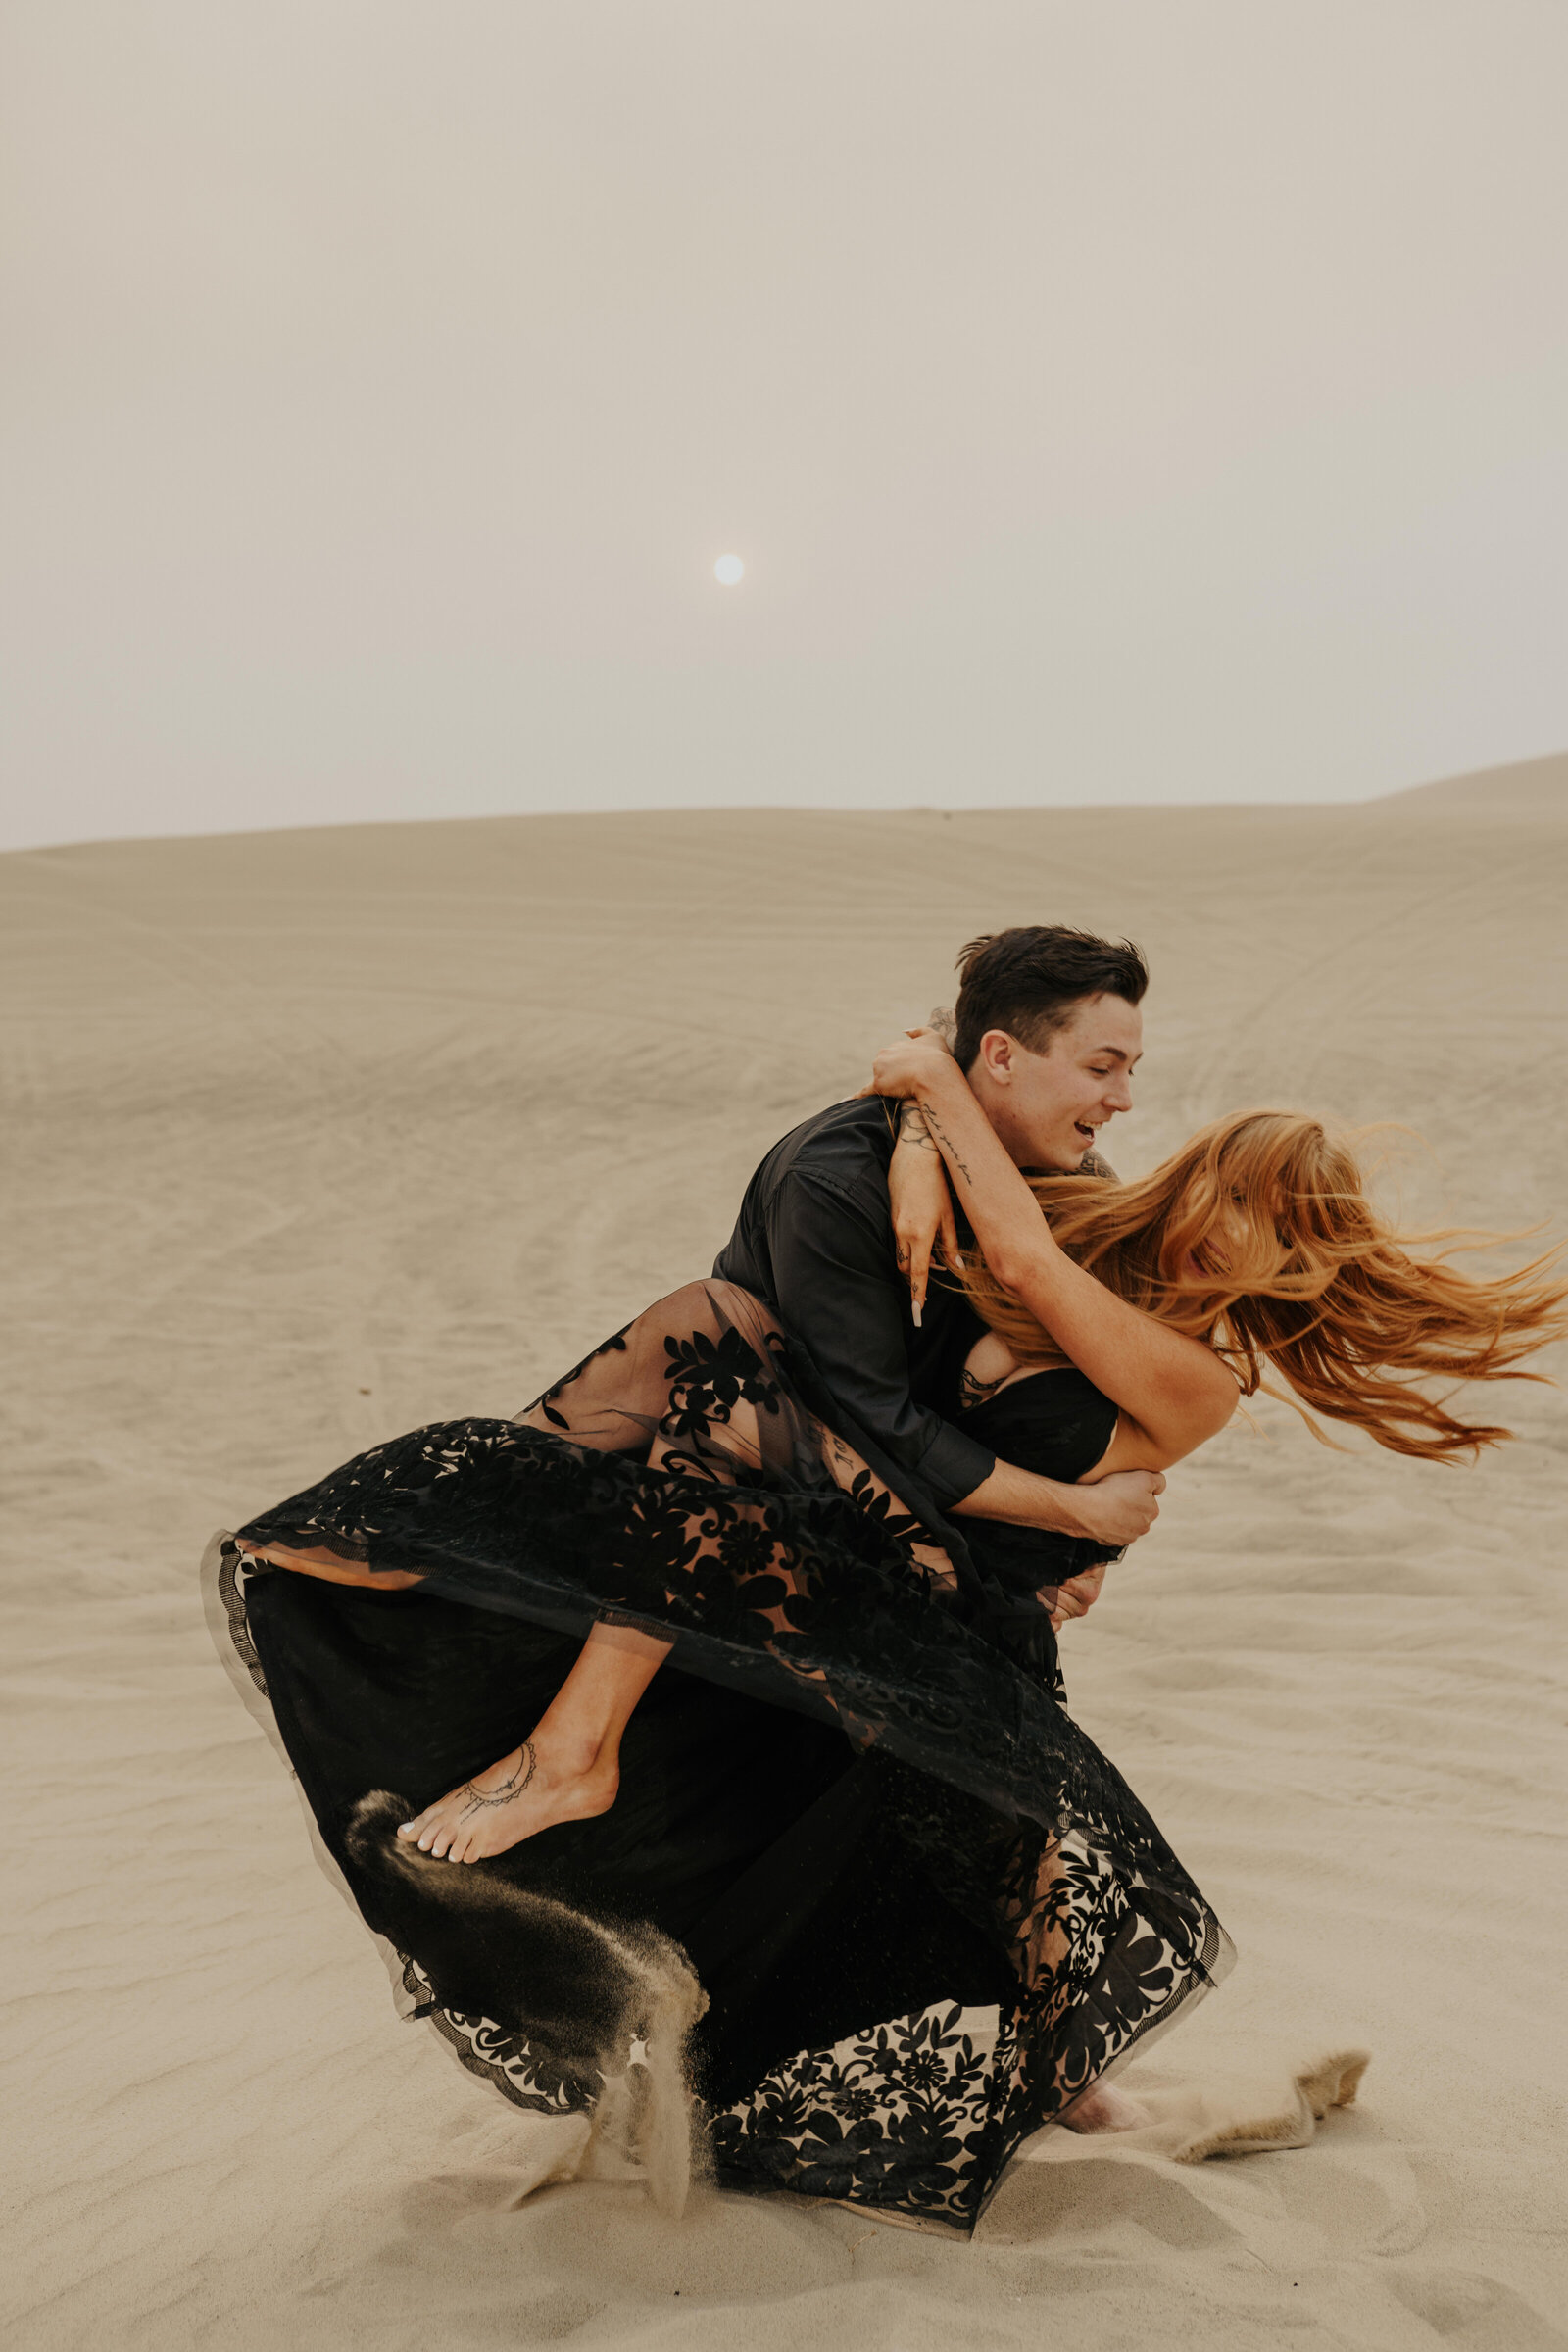 Sand Dunes Couples Photos - Raquel King Photography26